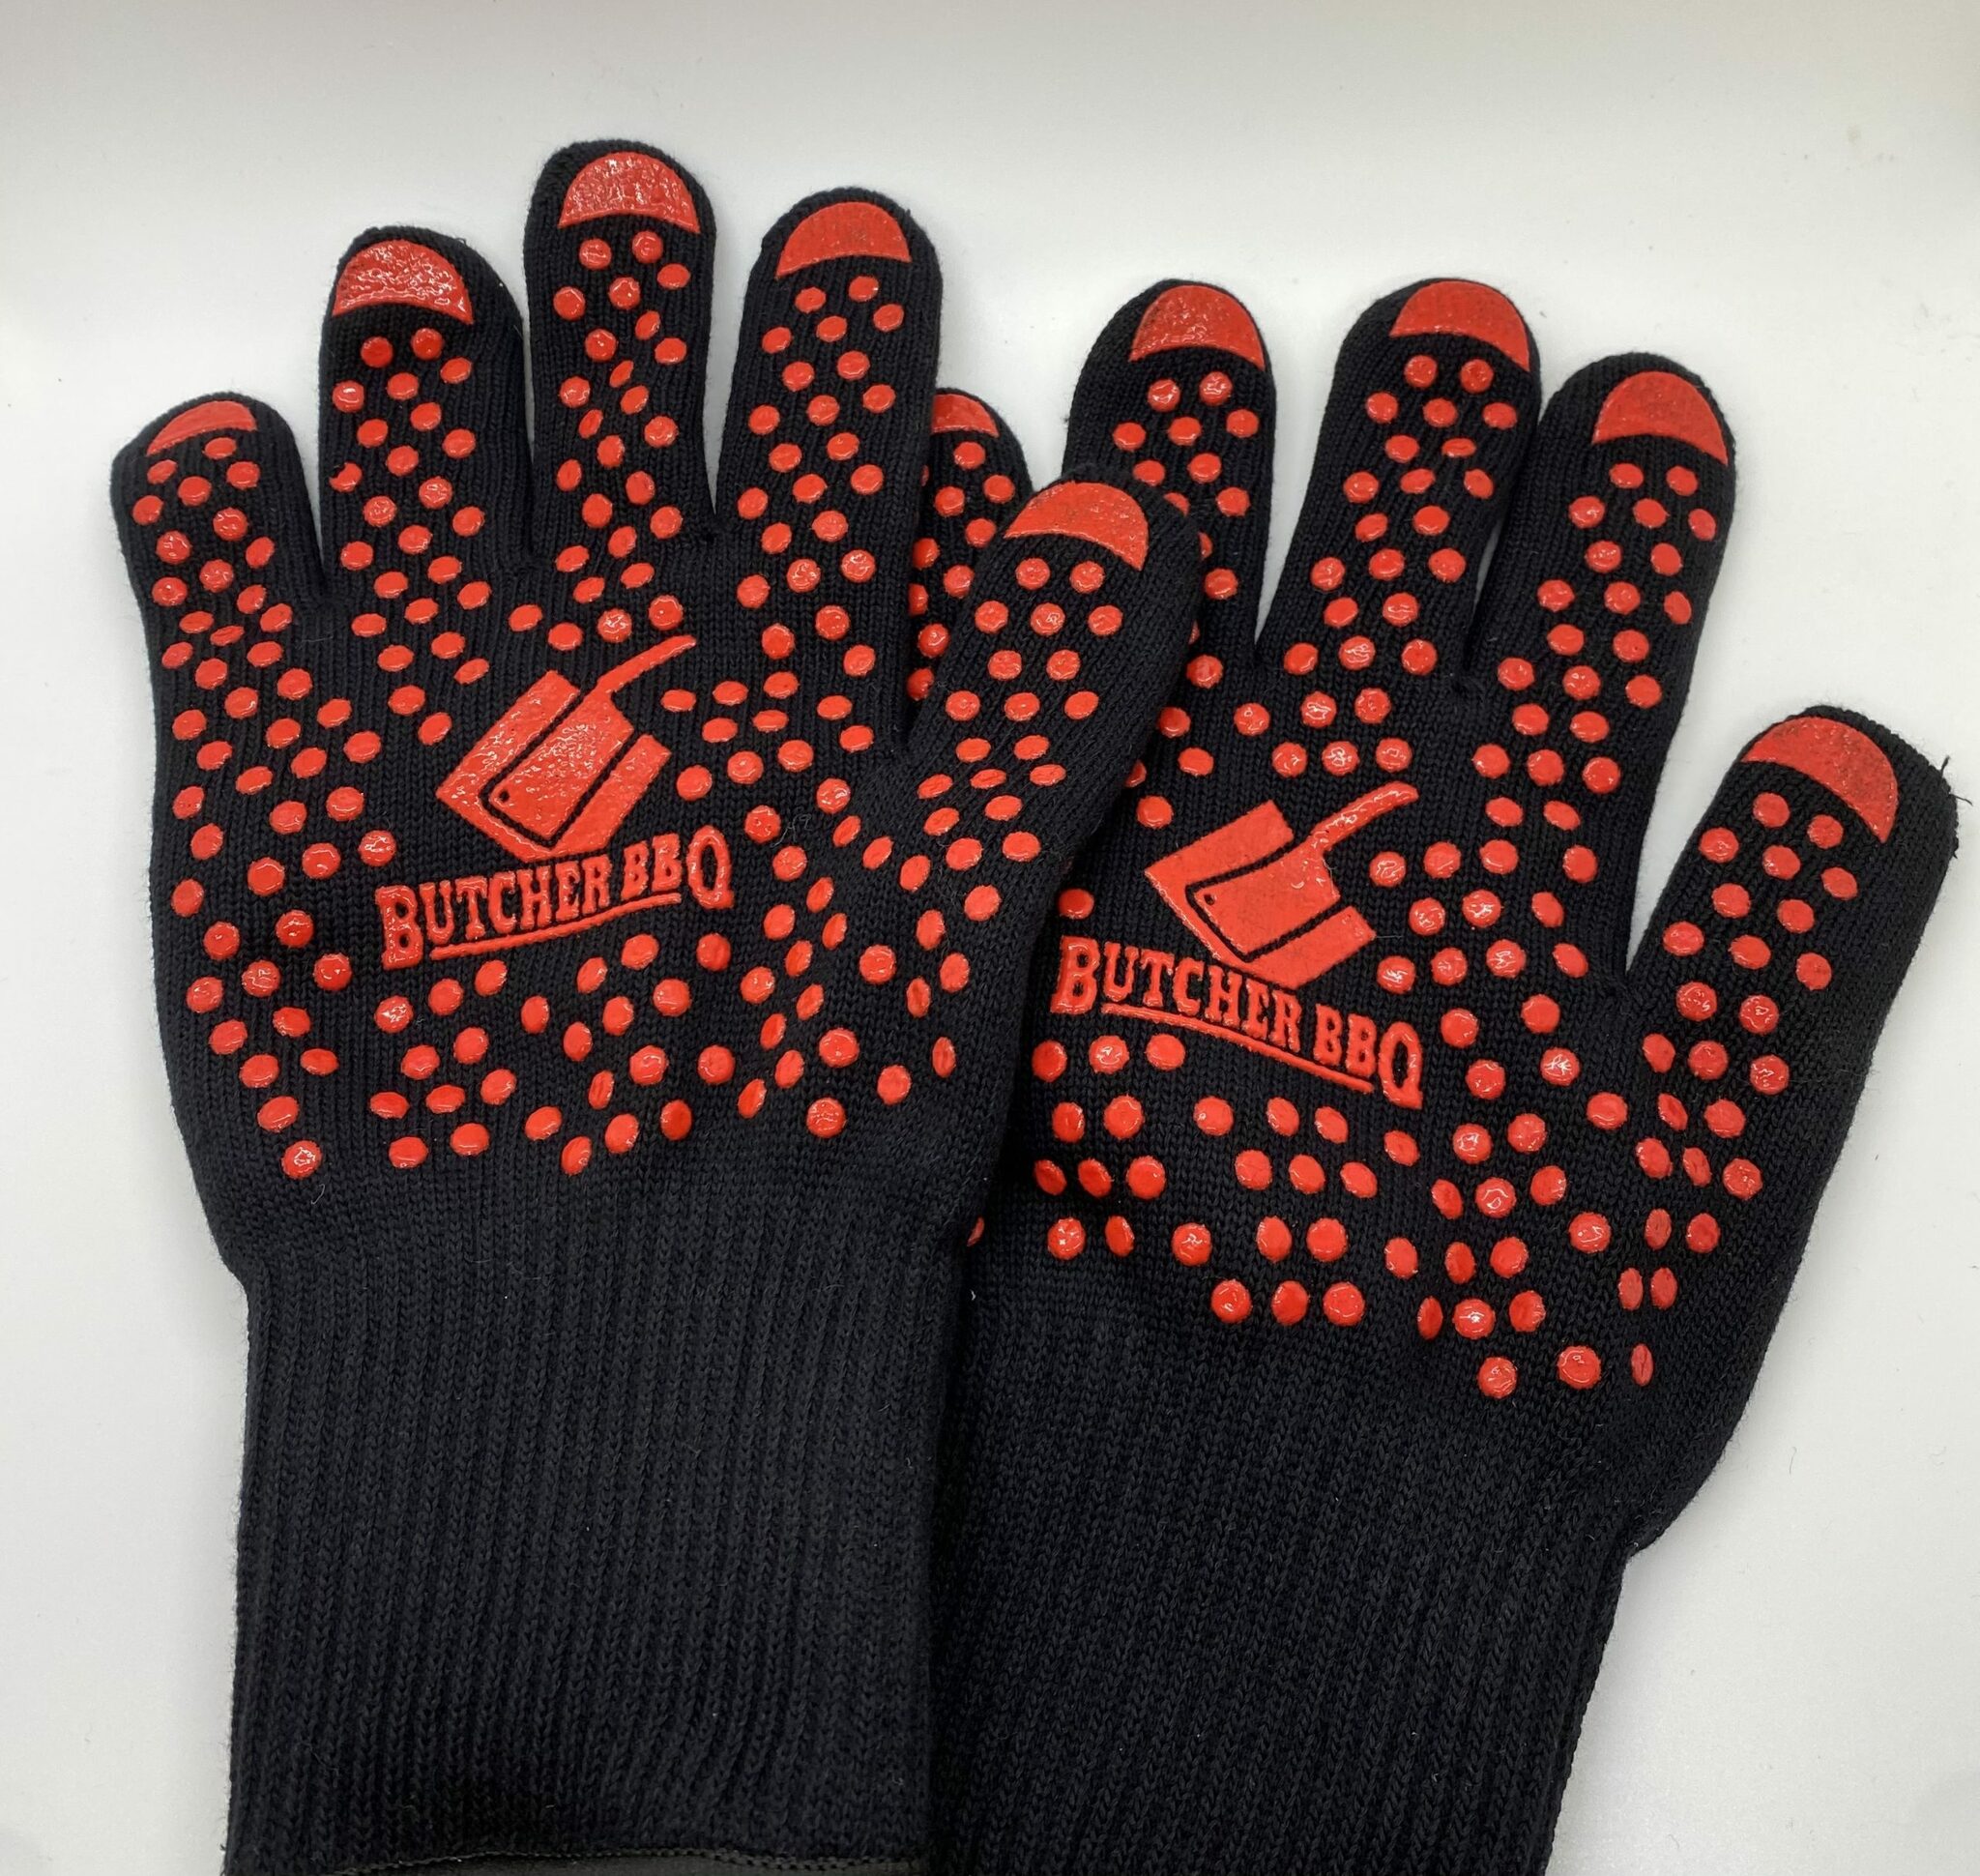 Butcher BBQ – Heat Resistant Gloves